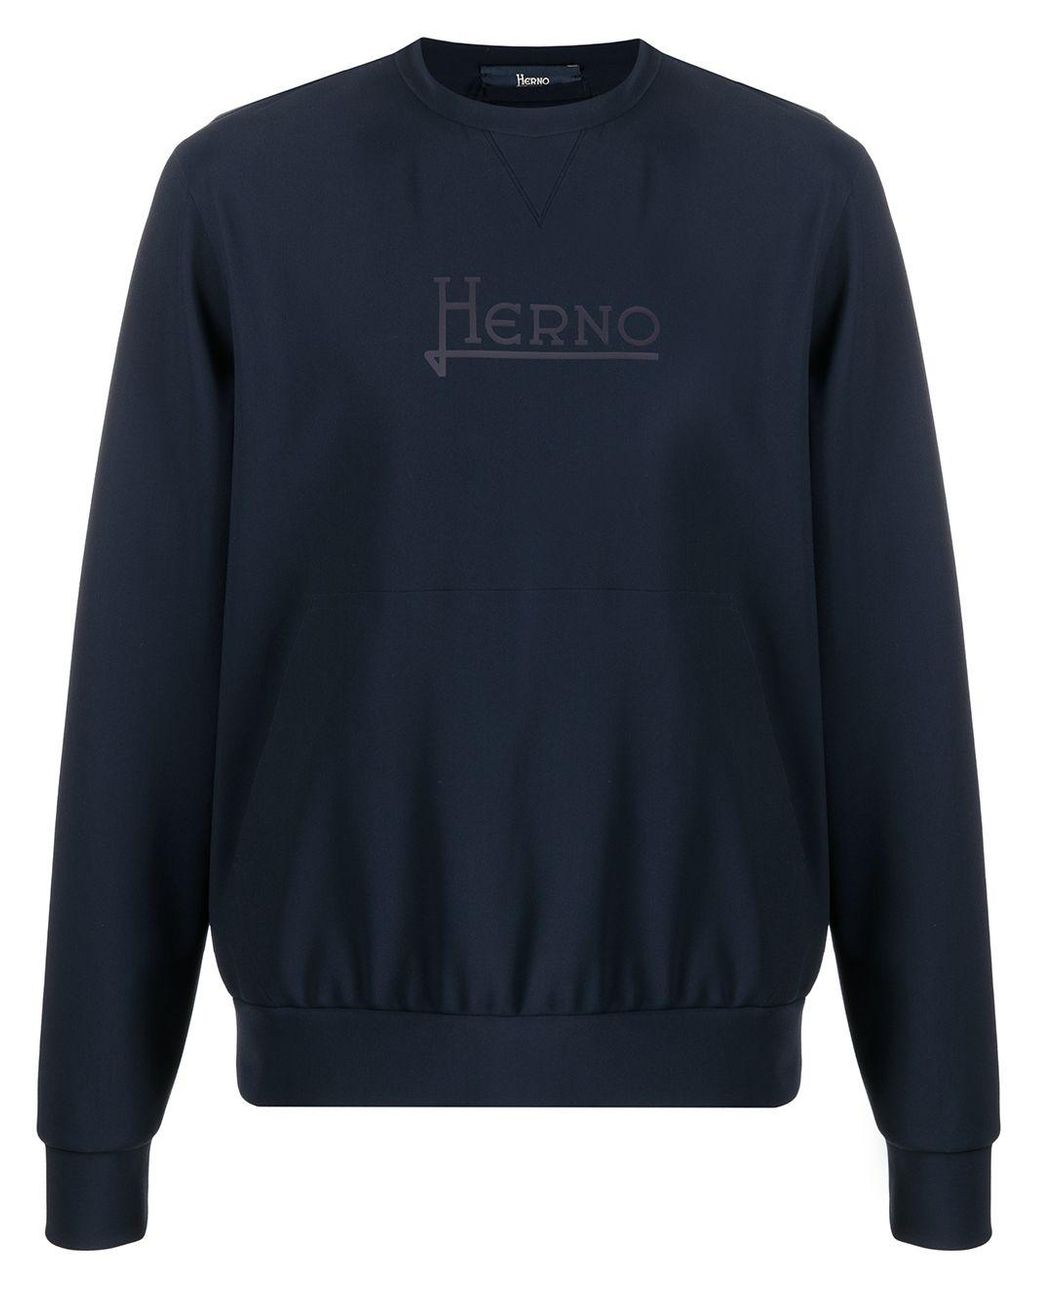 Herno Logo Print Sweatshirt in Blue for Men - Lyst